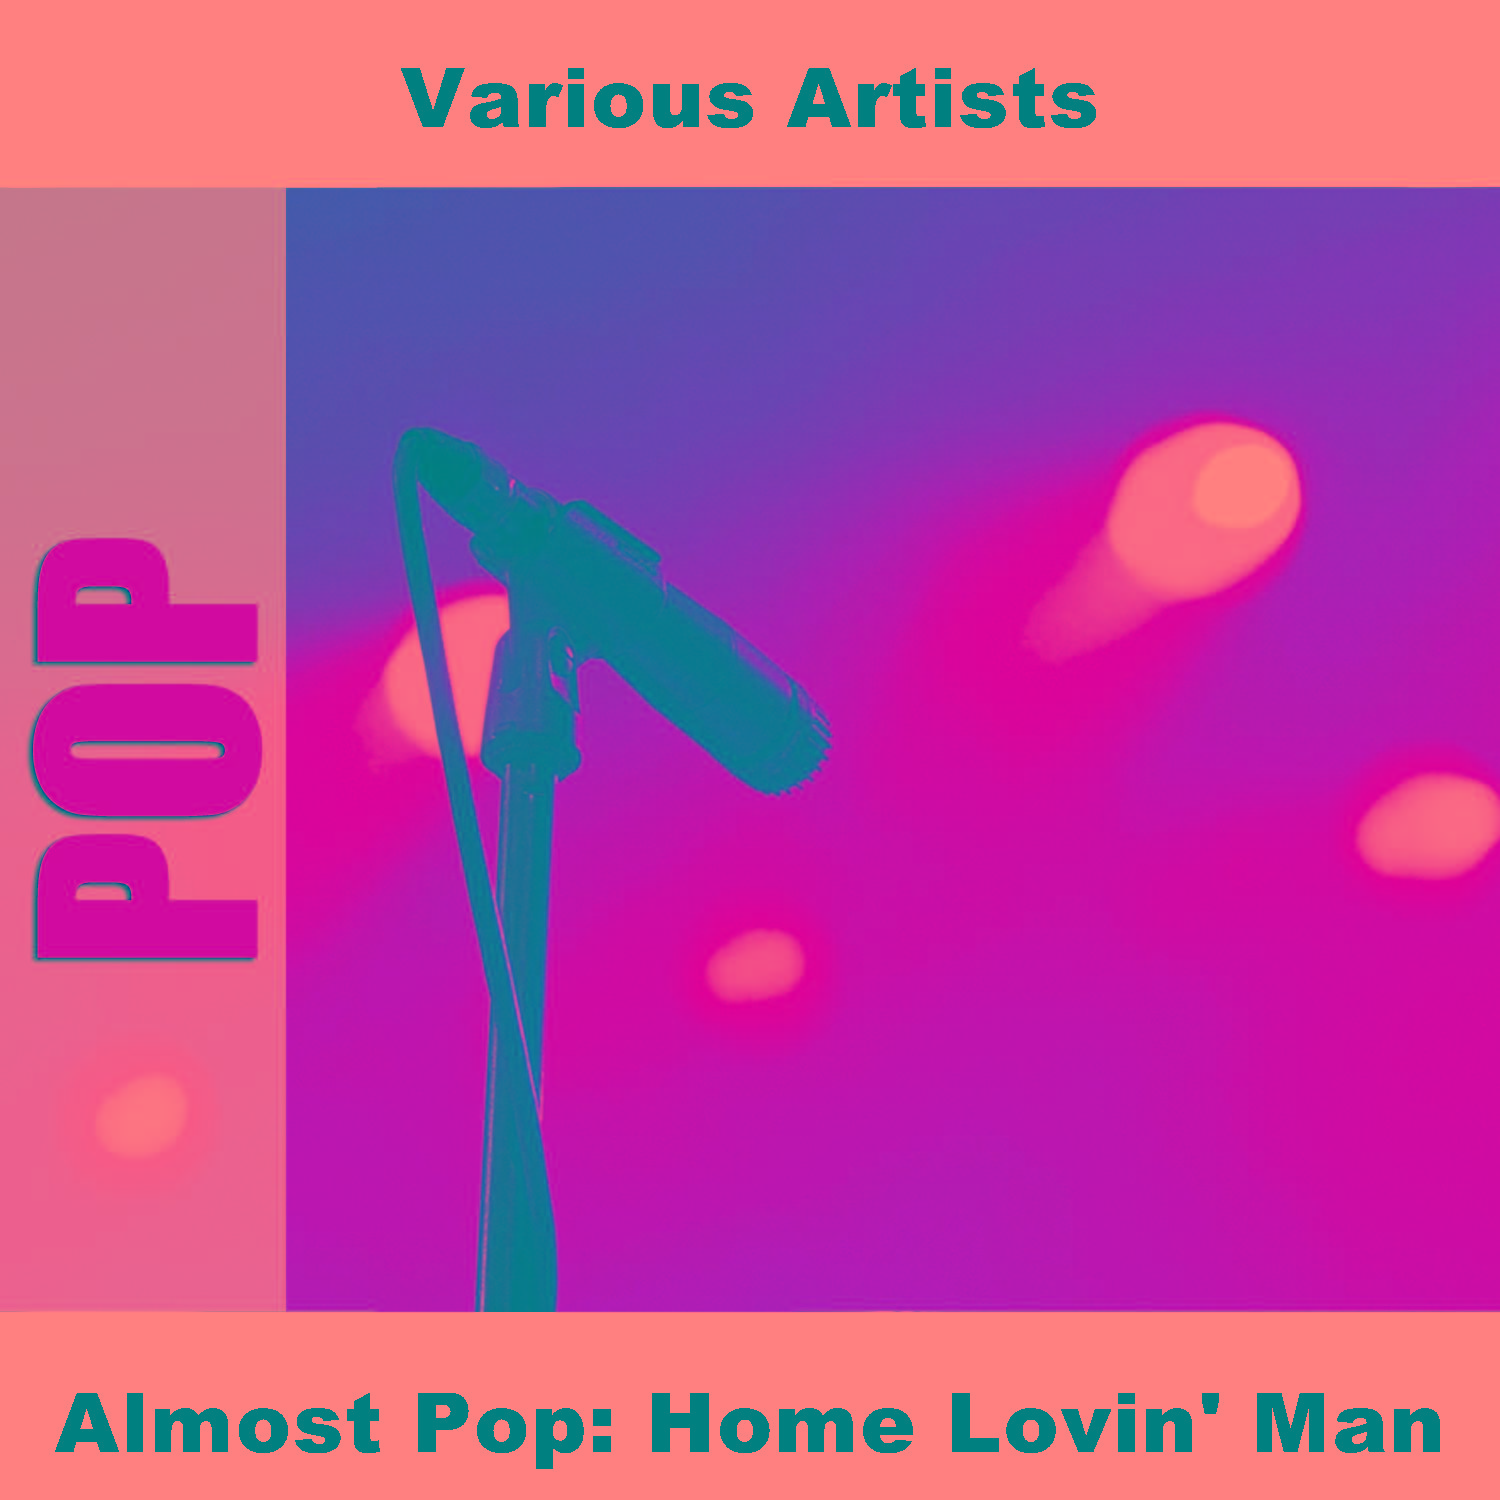 Almost Pop: Home Lovin' Man